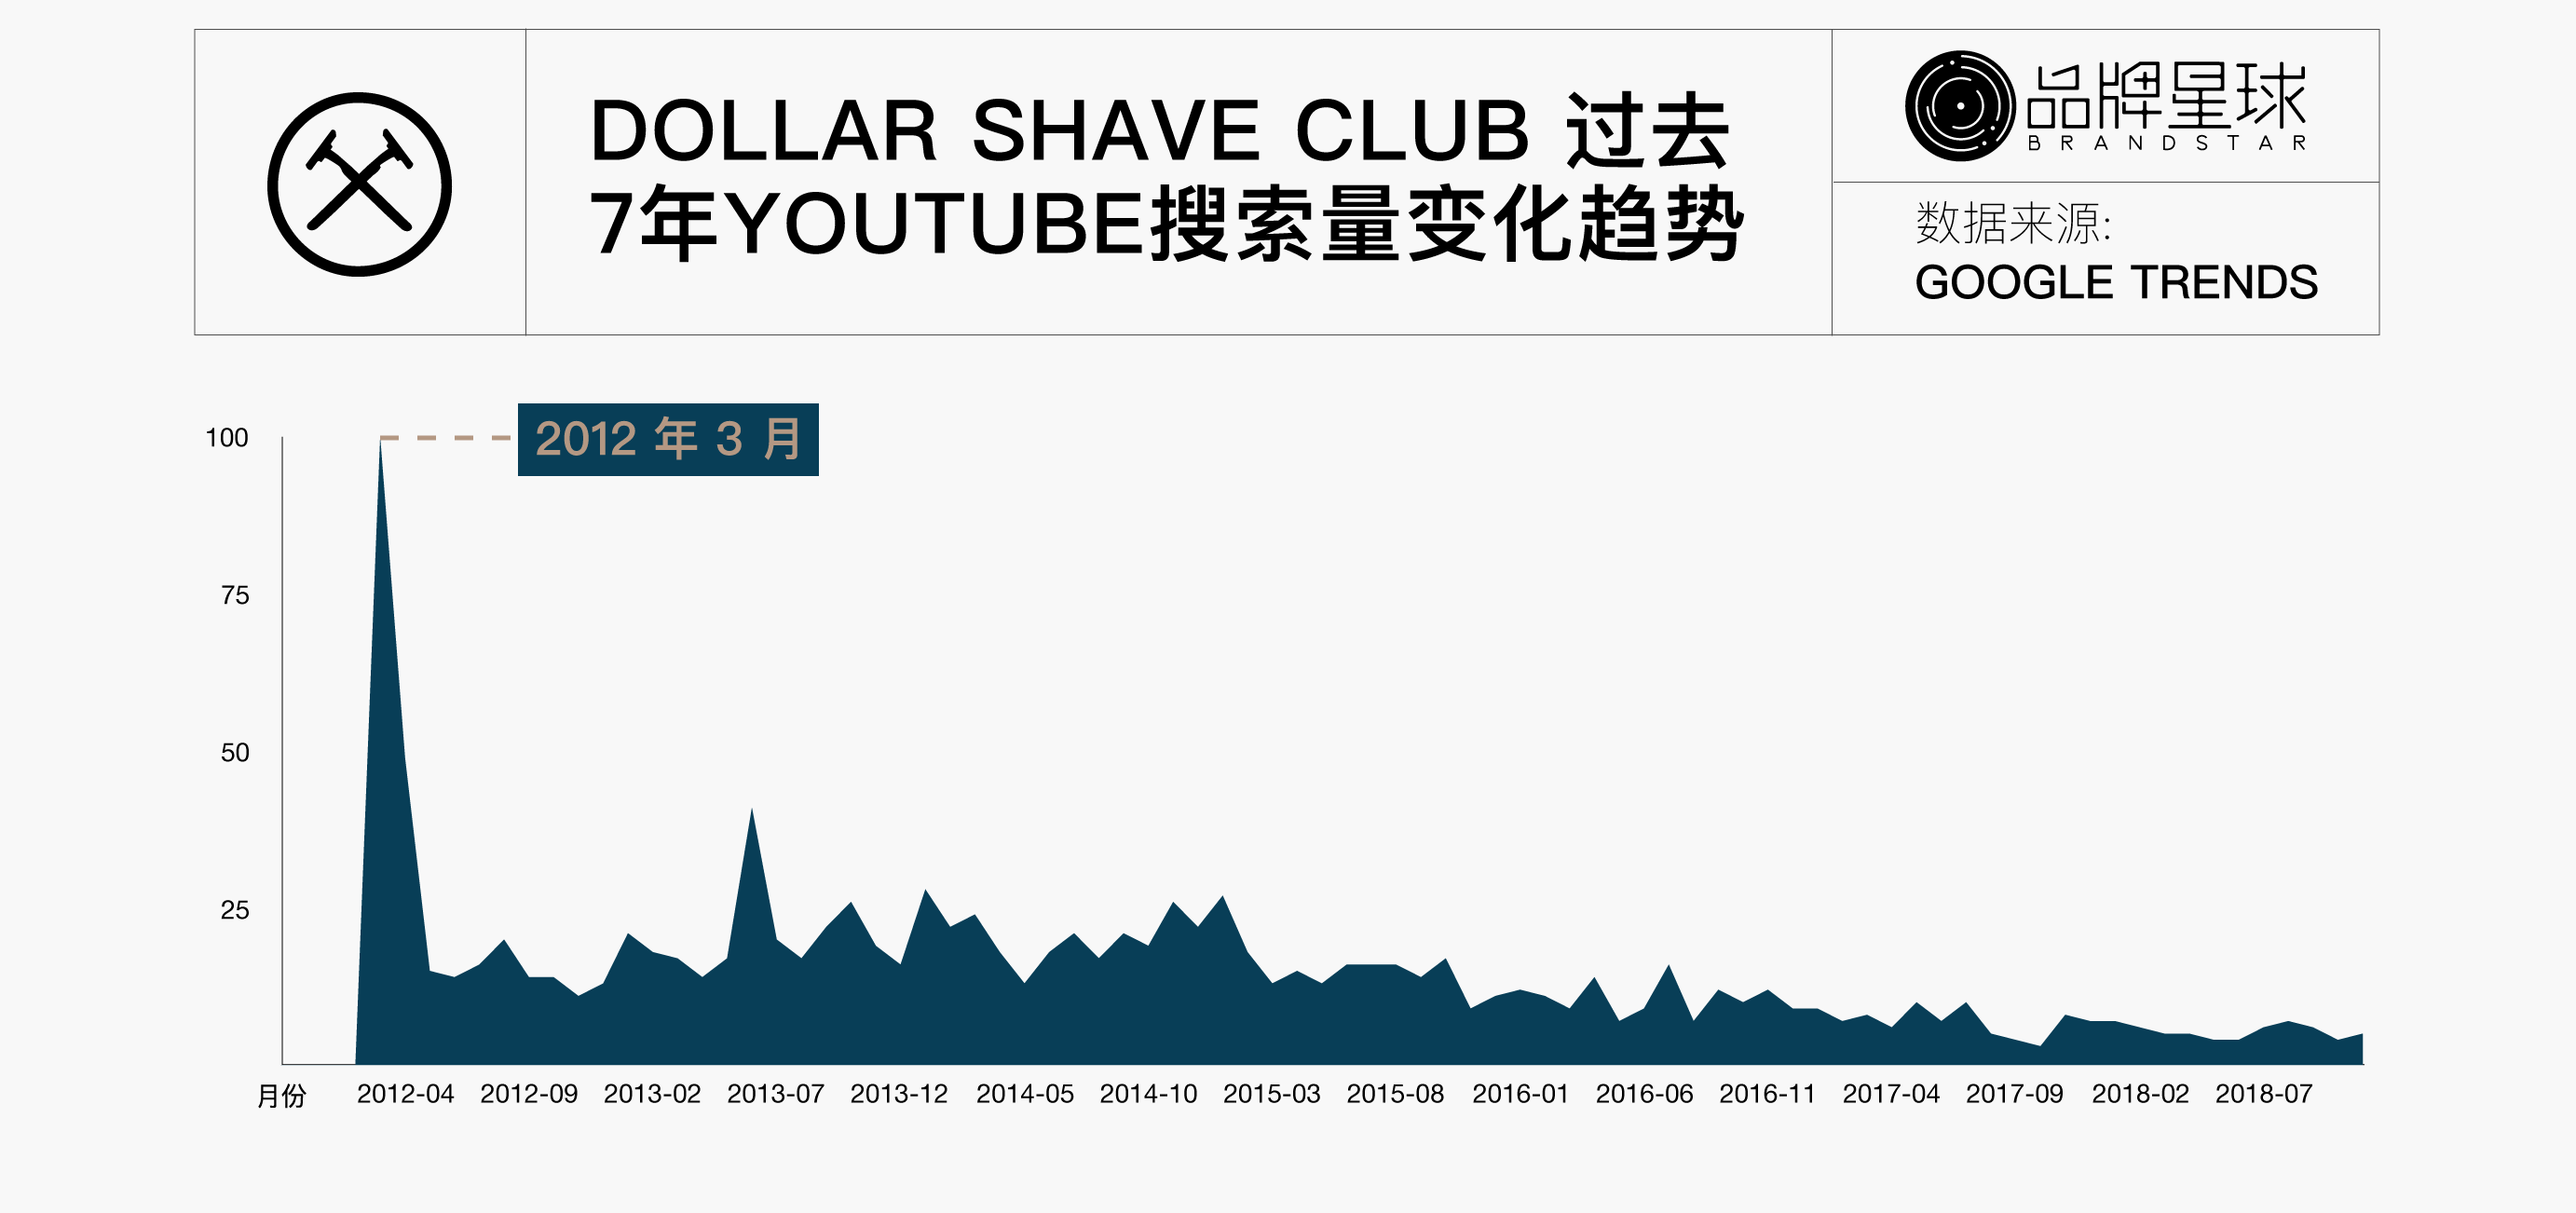 Dollar shave club Youtube 搜索量